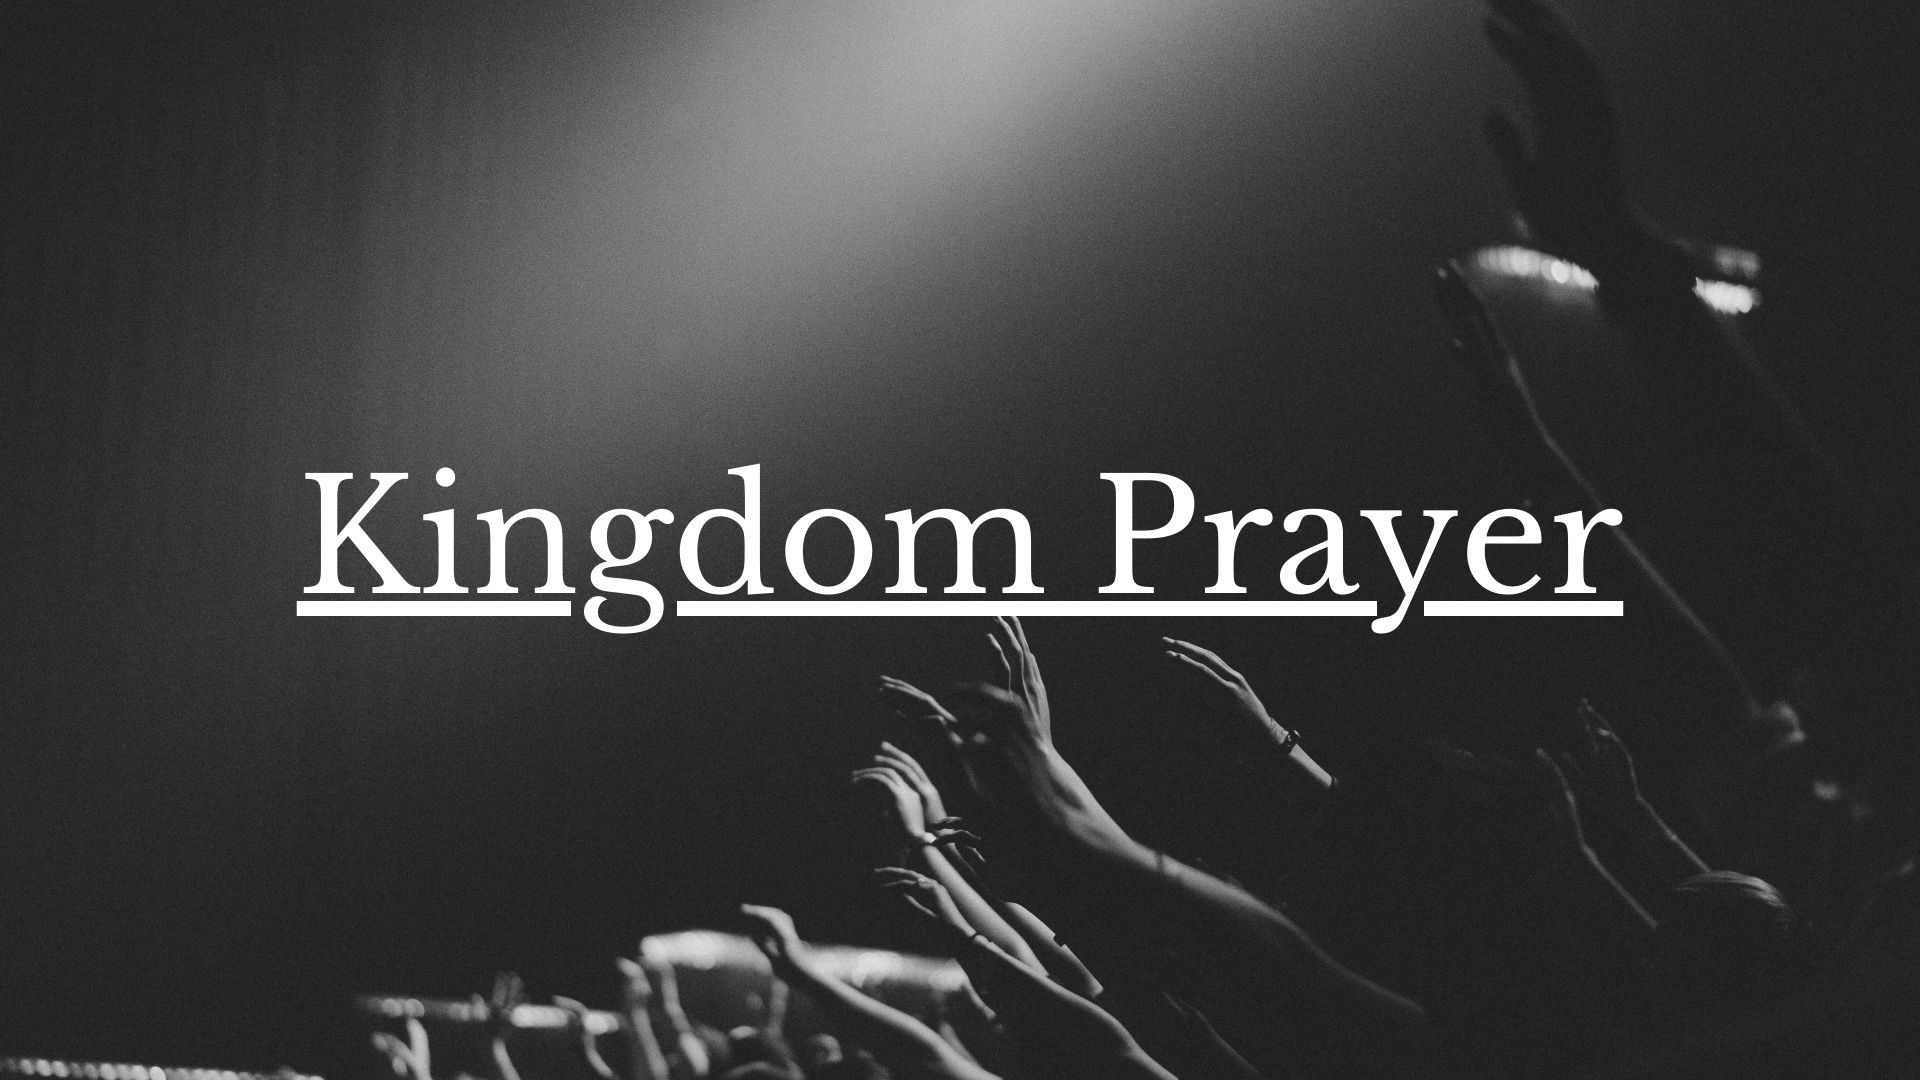 Kingdom Prayer 1920x1080 image